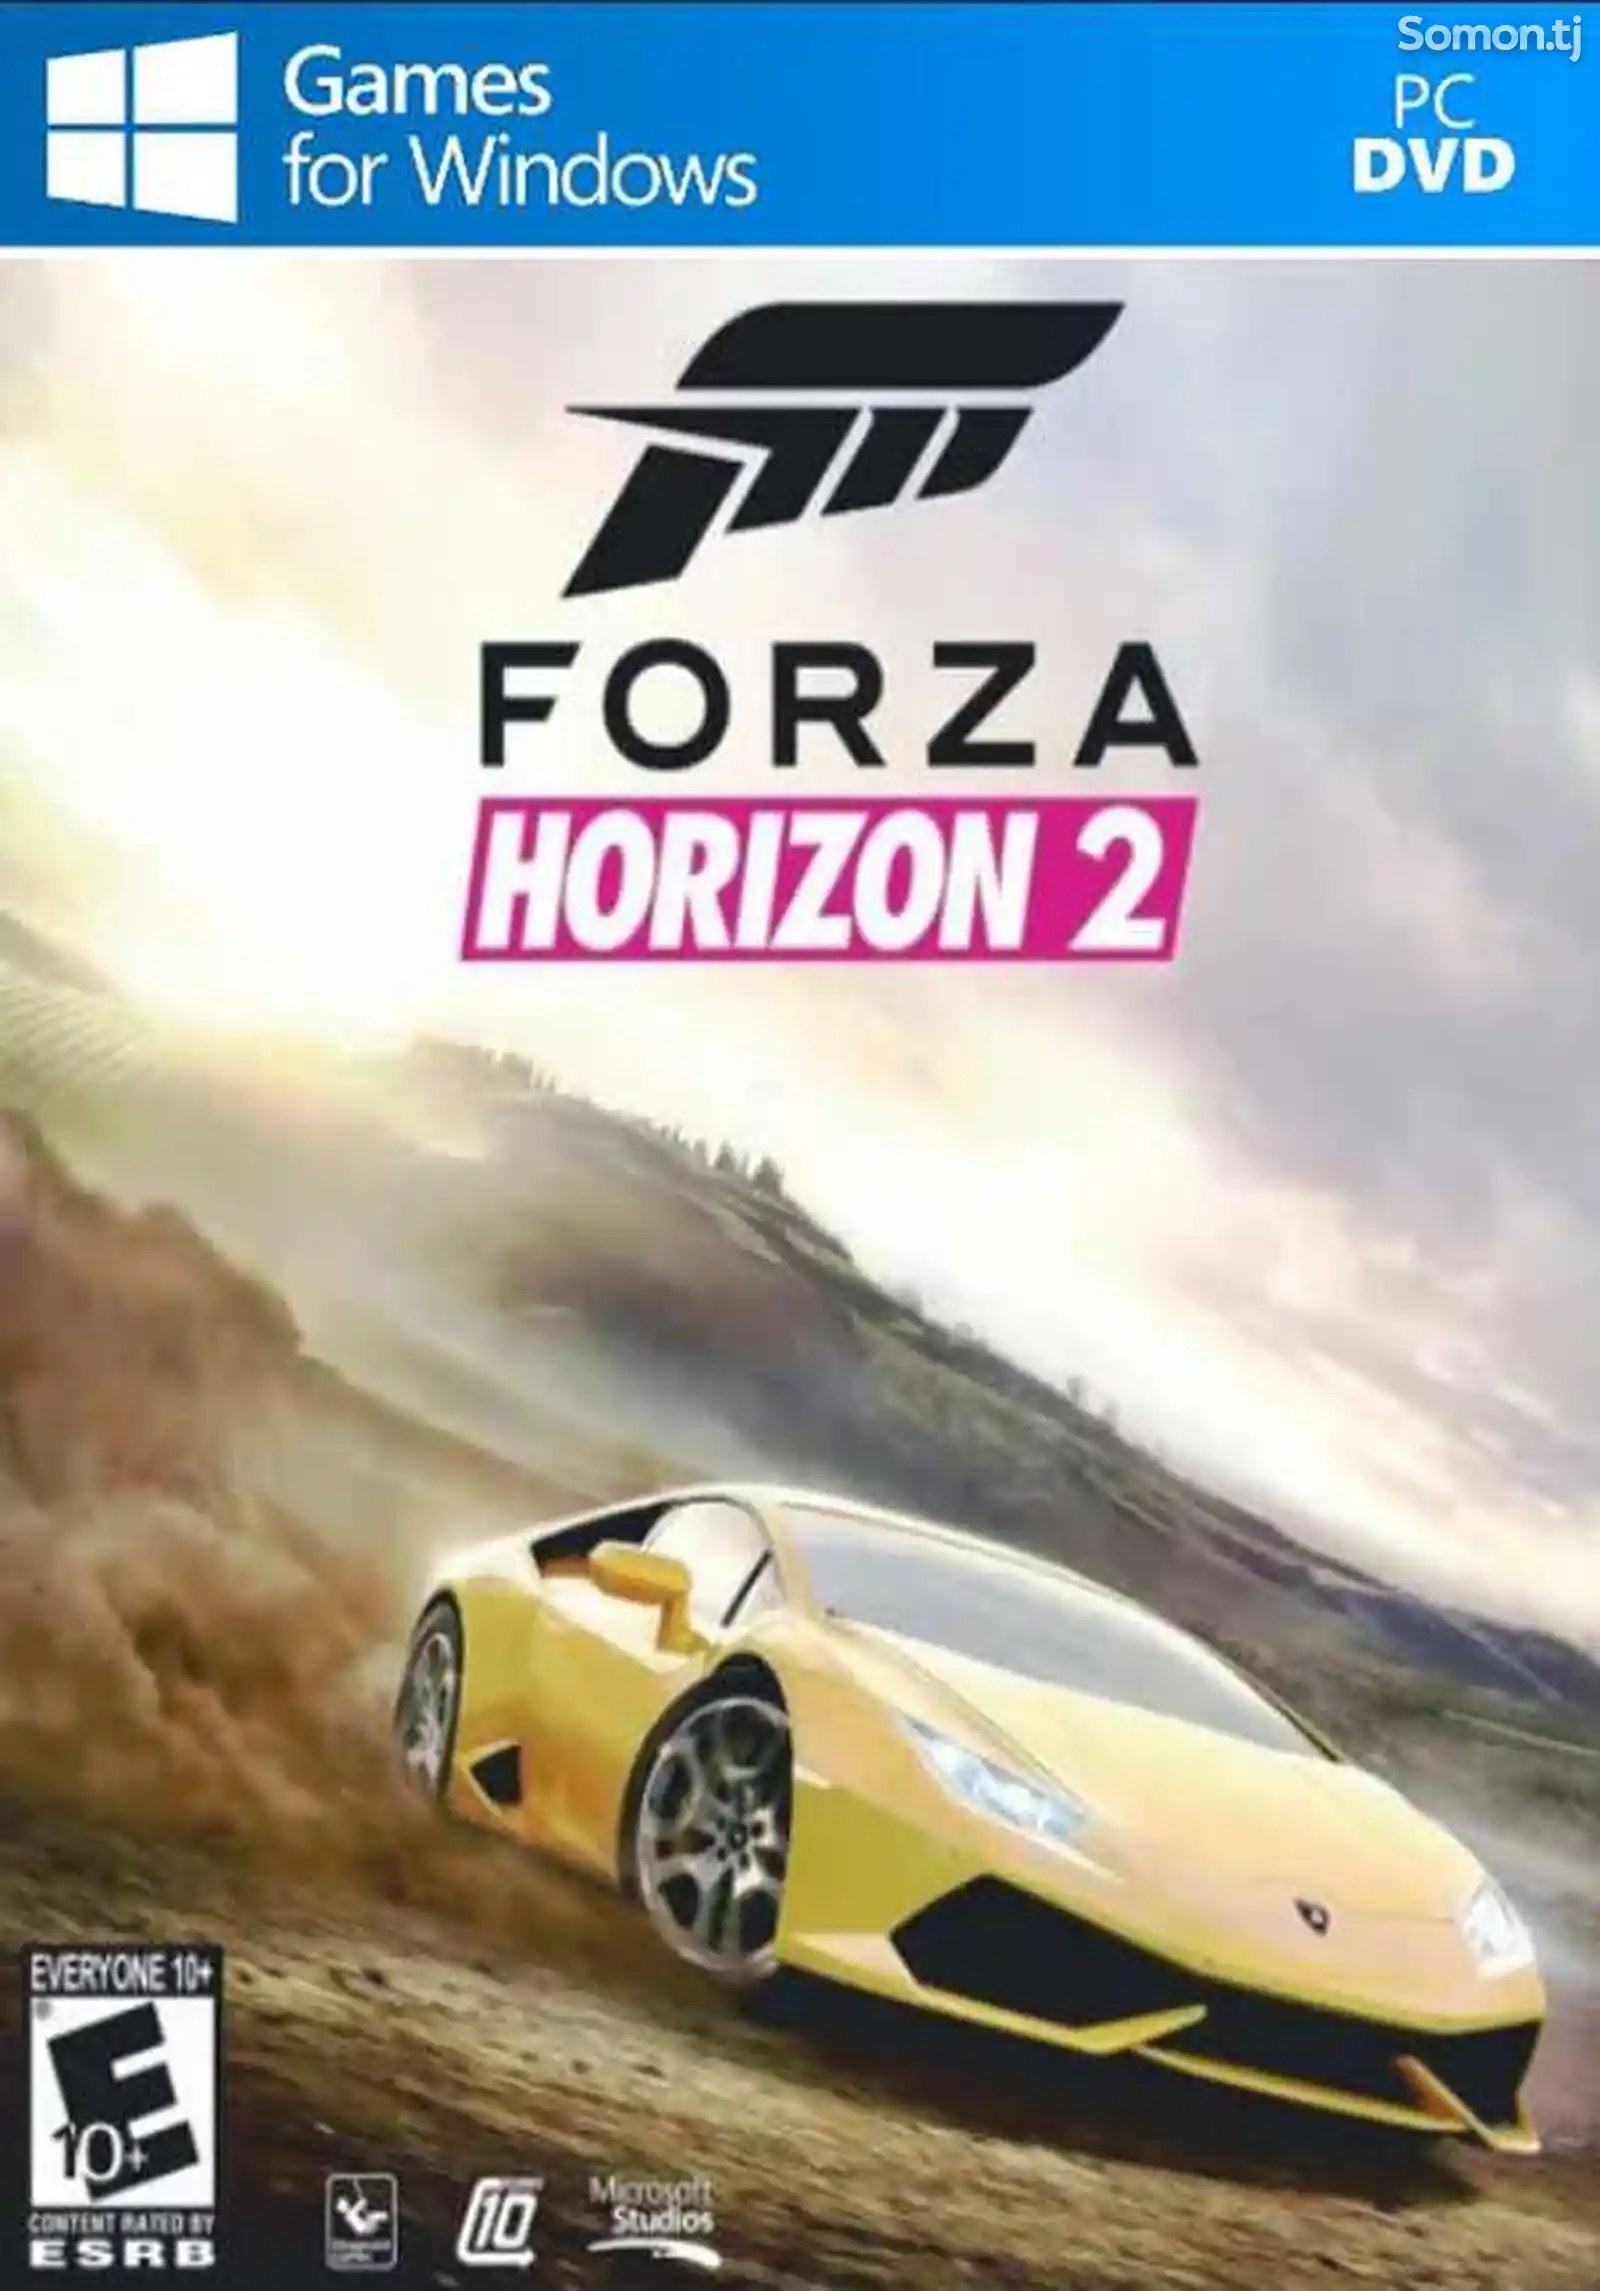 Игра Forza horizon 2 для компьютера-пк-pc-1